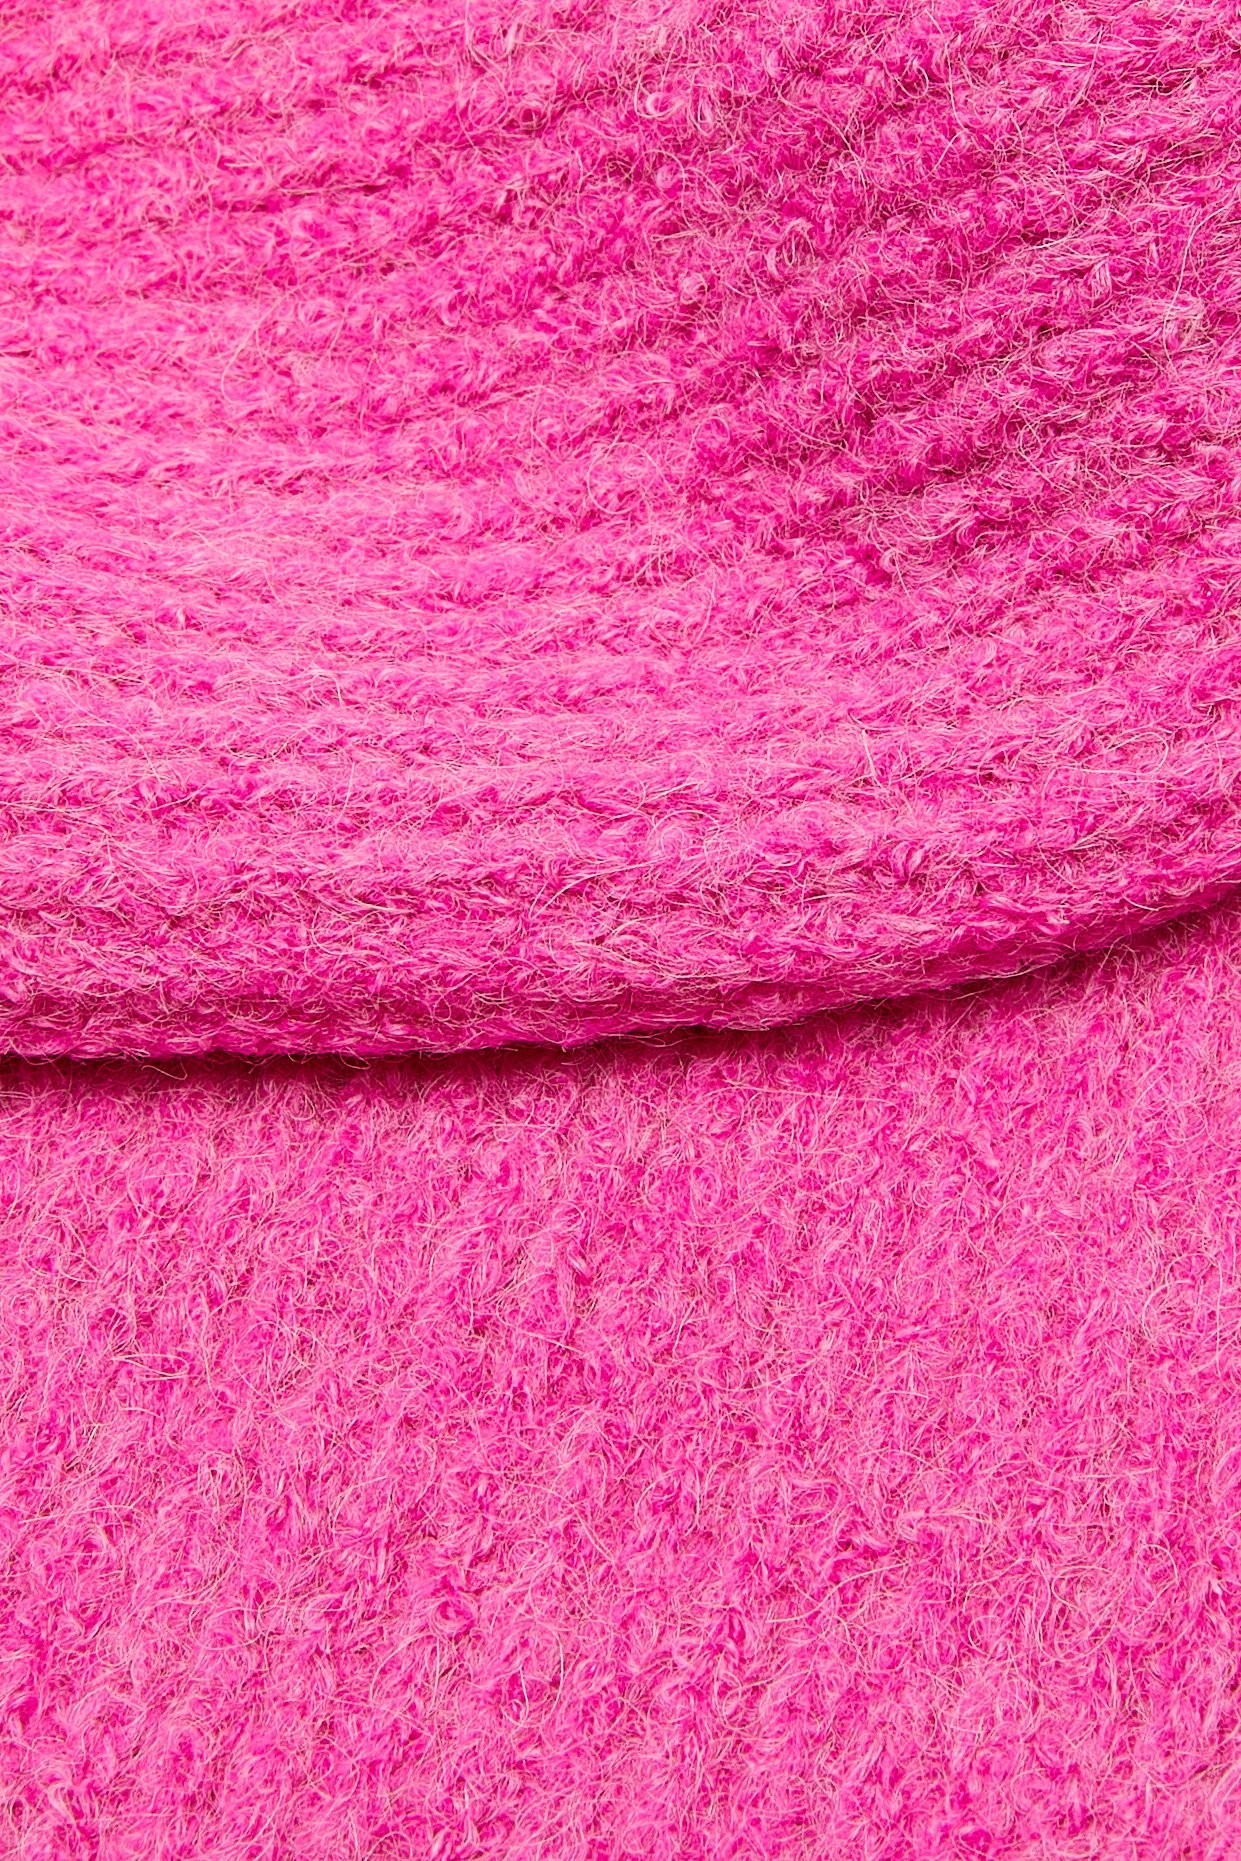 CKS Dames - GRANNA - scarf (winter) - bright pink